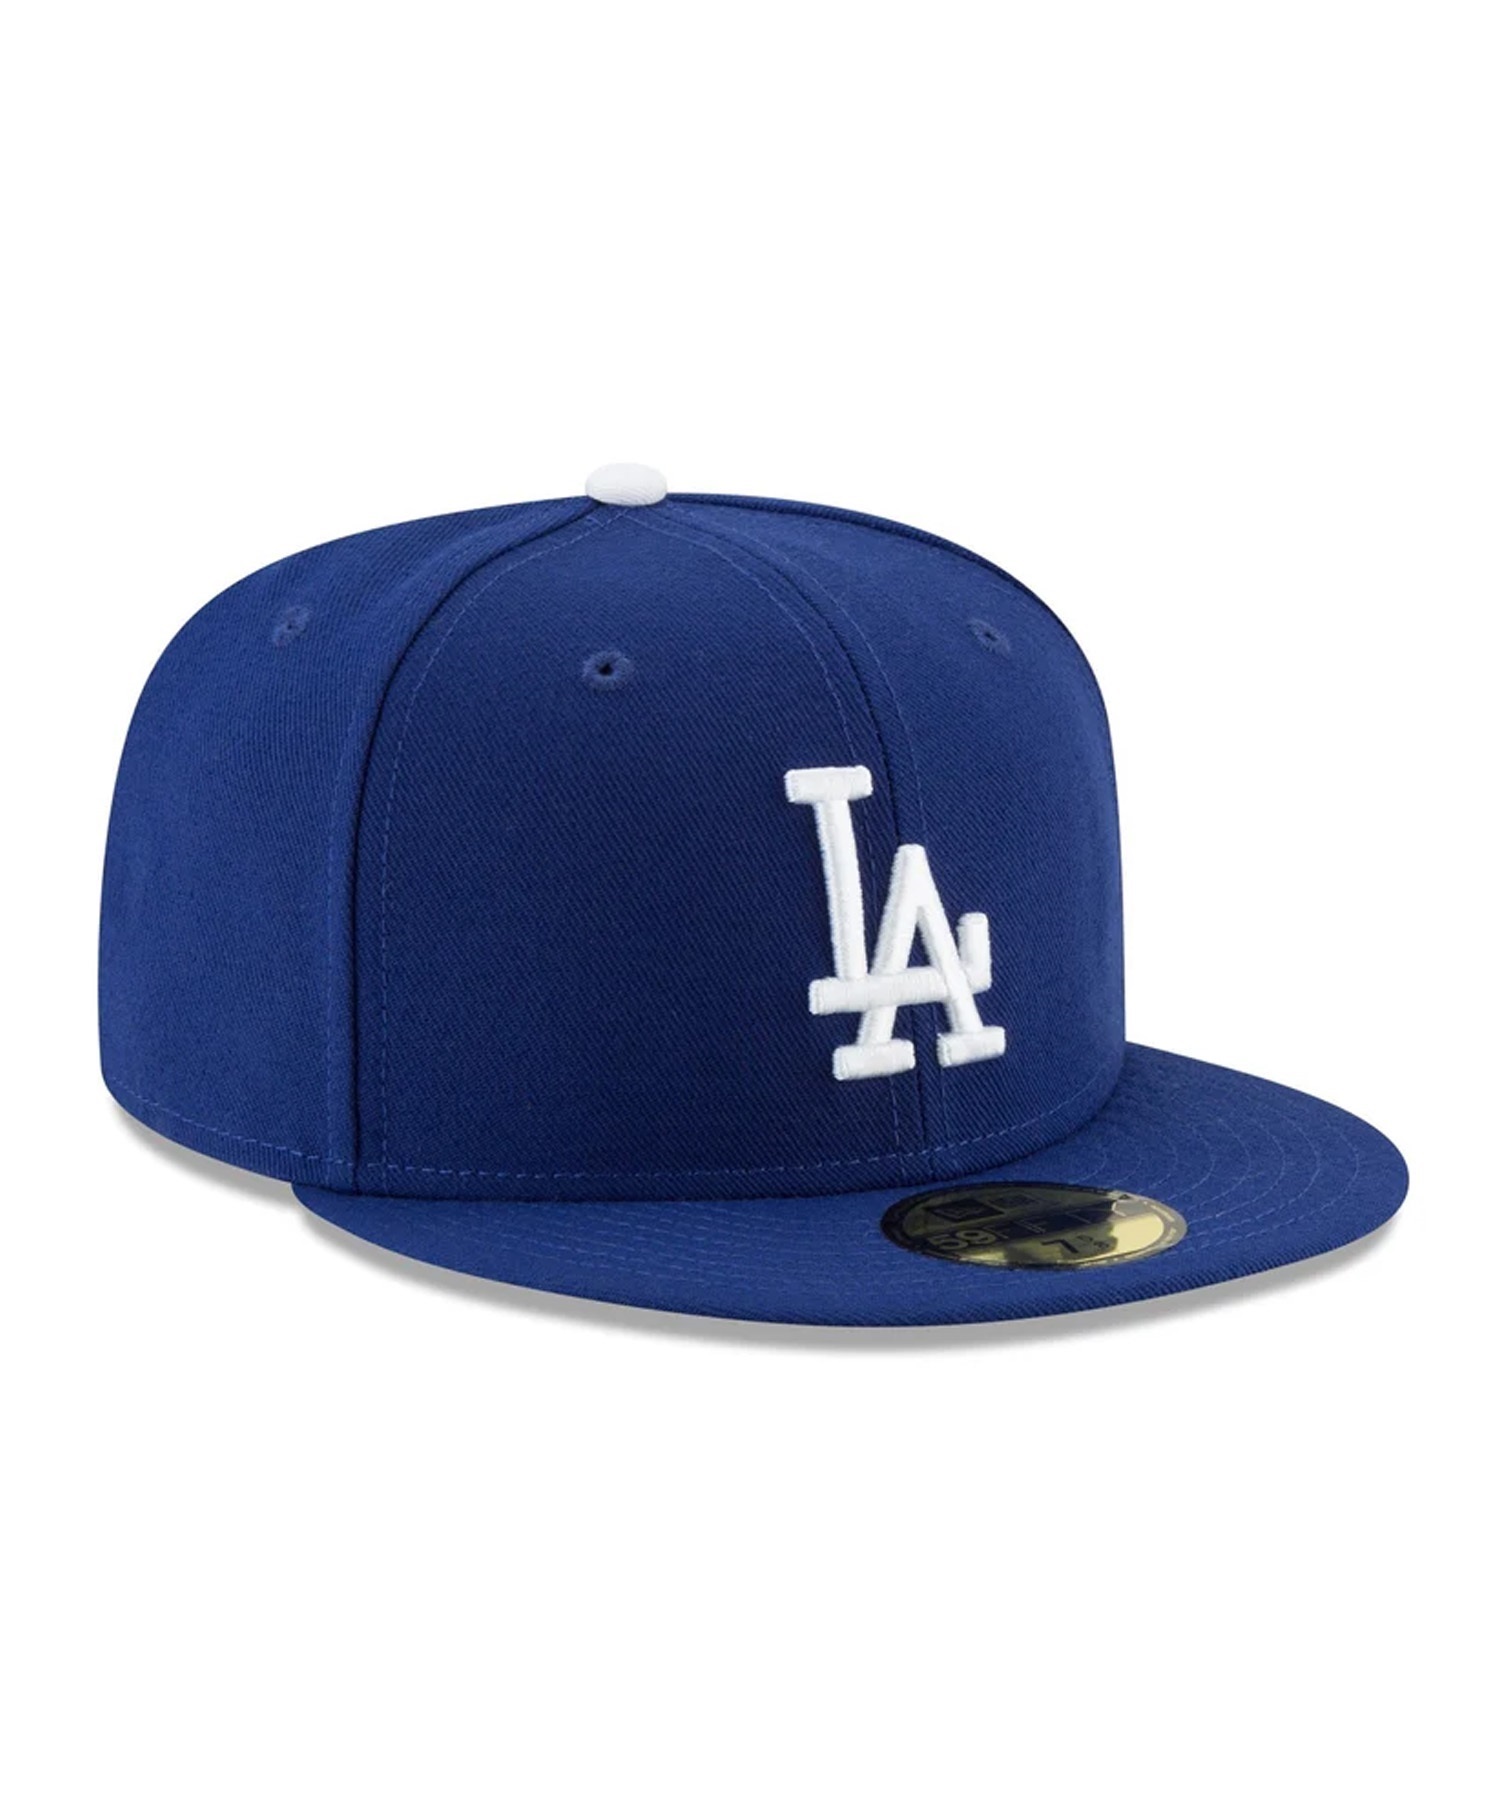 NEW ERA ニューエラ 59FIFTY MLBオンフィールド ロサンゼルス・ドジャース ゲーム キャップ 帽子 13554994(ROY-7)